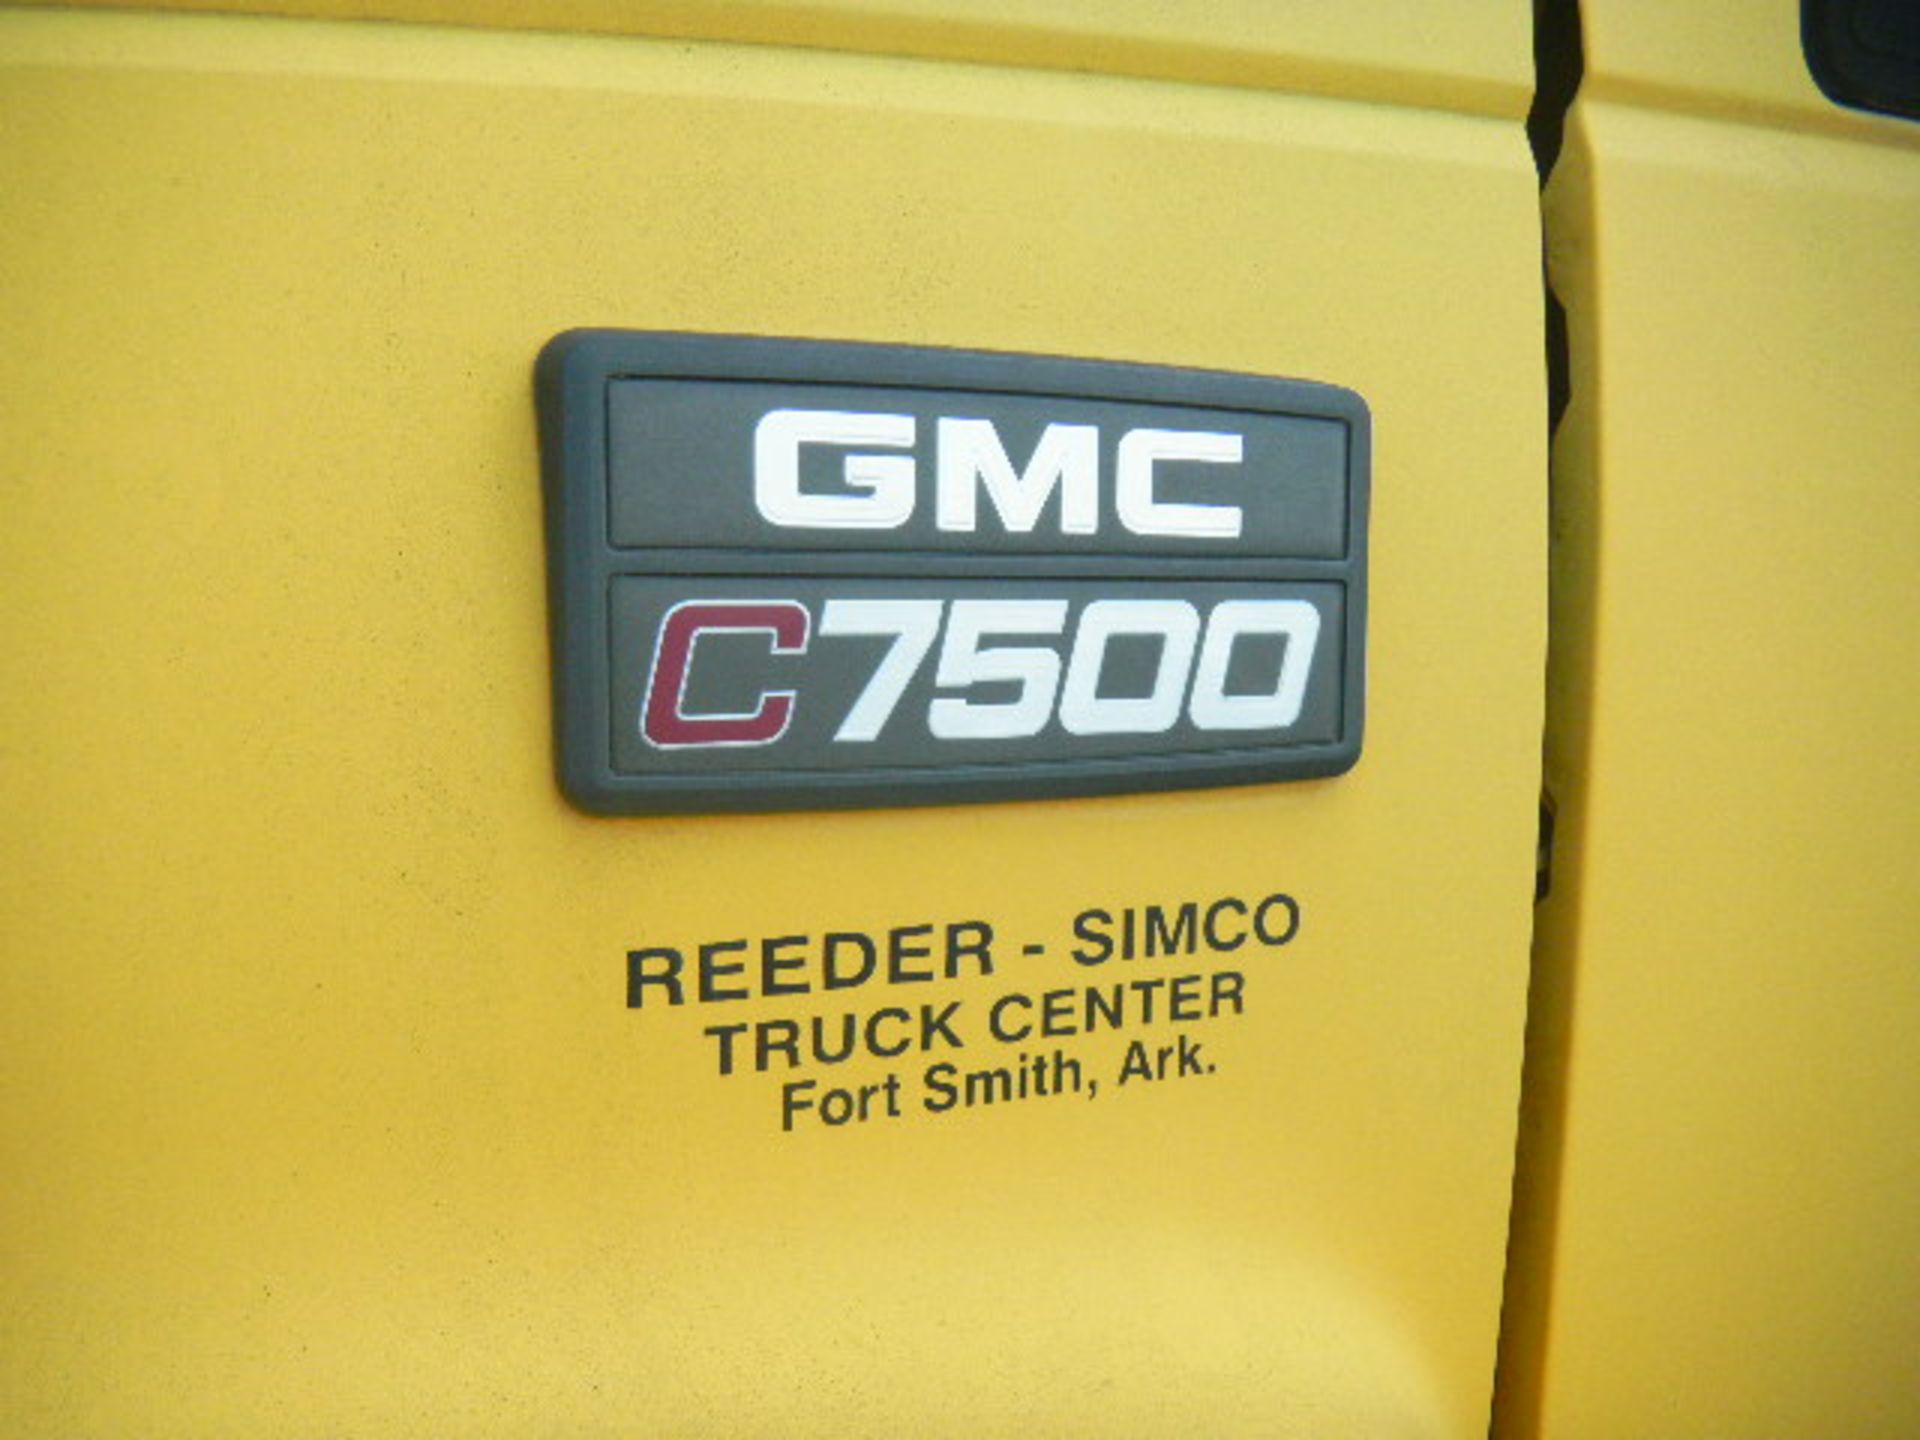 1999 GMC 7500 Truck - Asset I.D. # 788 - Last of Vin (503208) - Image 8 of 12